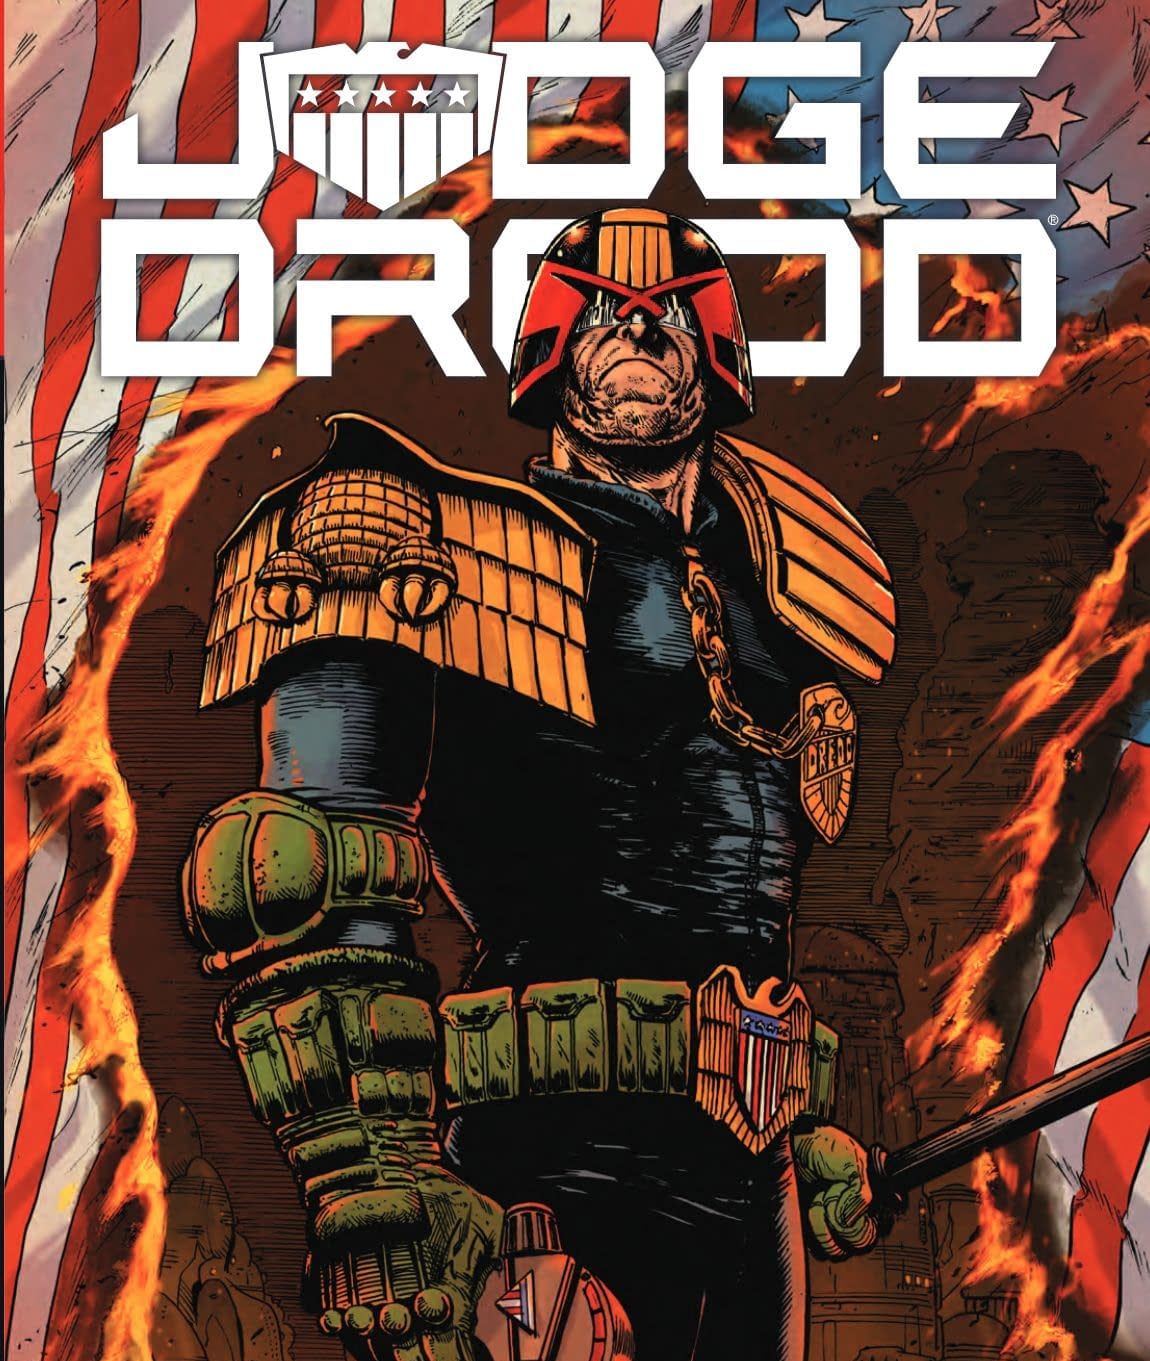 Judge Dredd Started As A comic book series